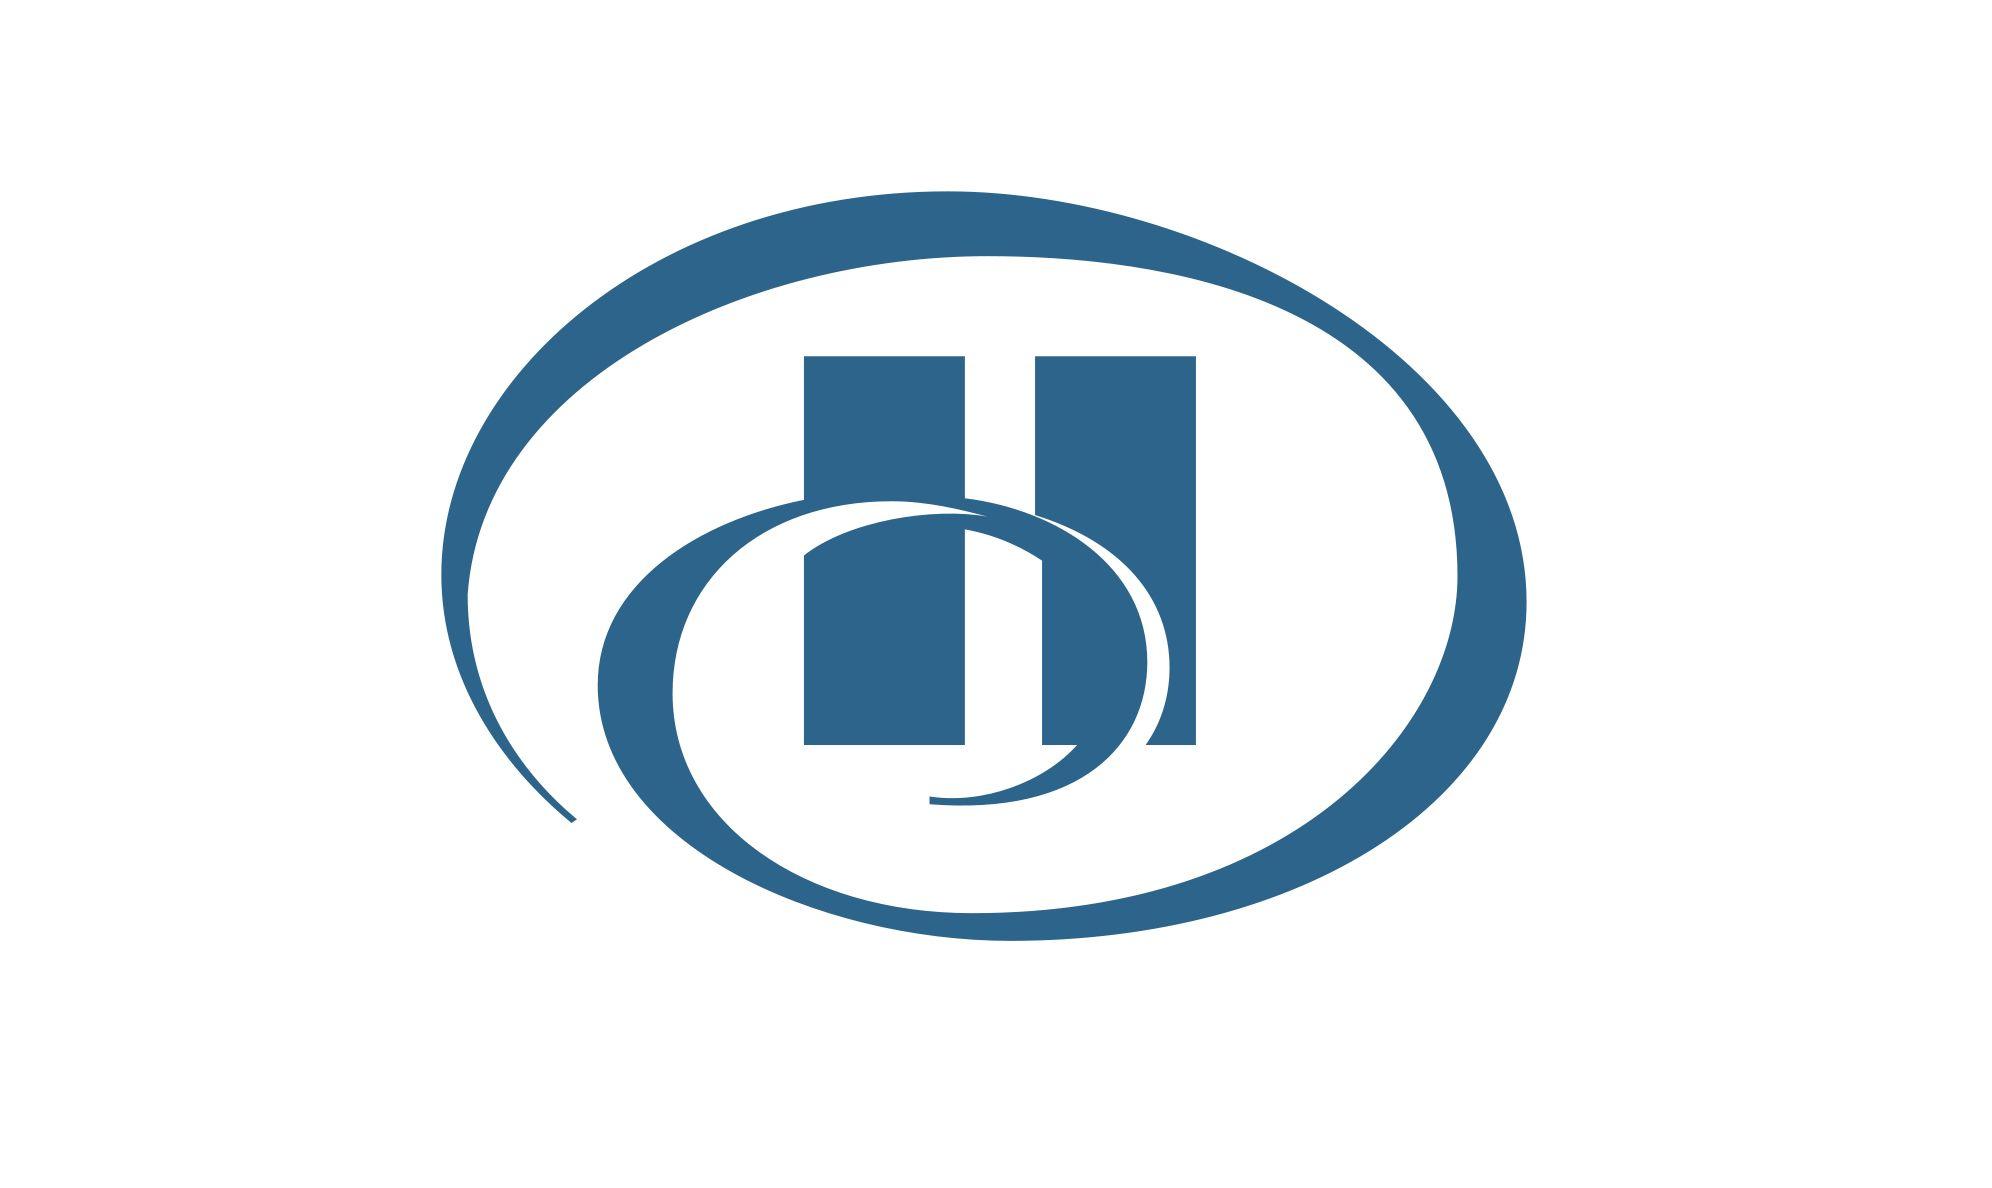 Hilton Hotel Logo - Hilton Logo, Hilton Symbol Meaning, History and Evolution